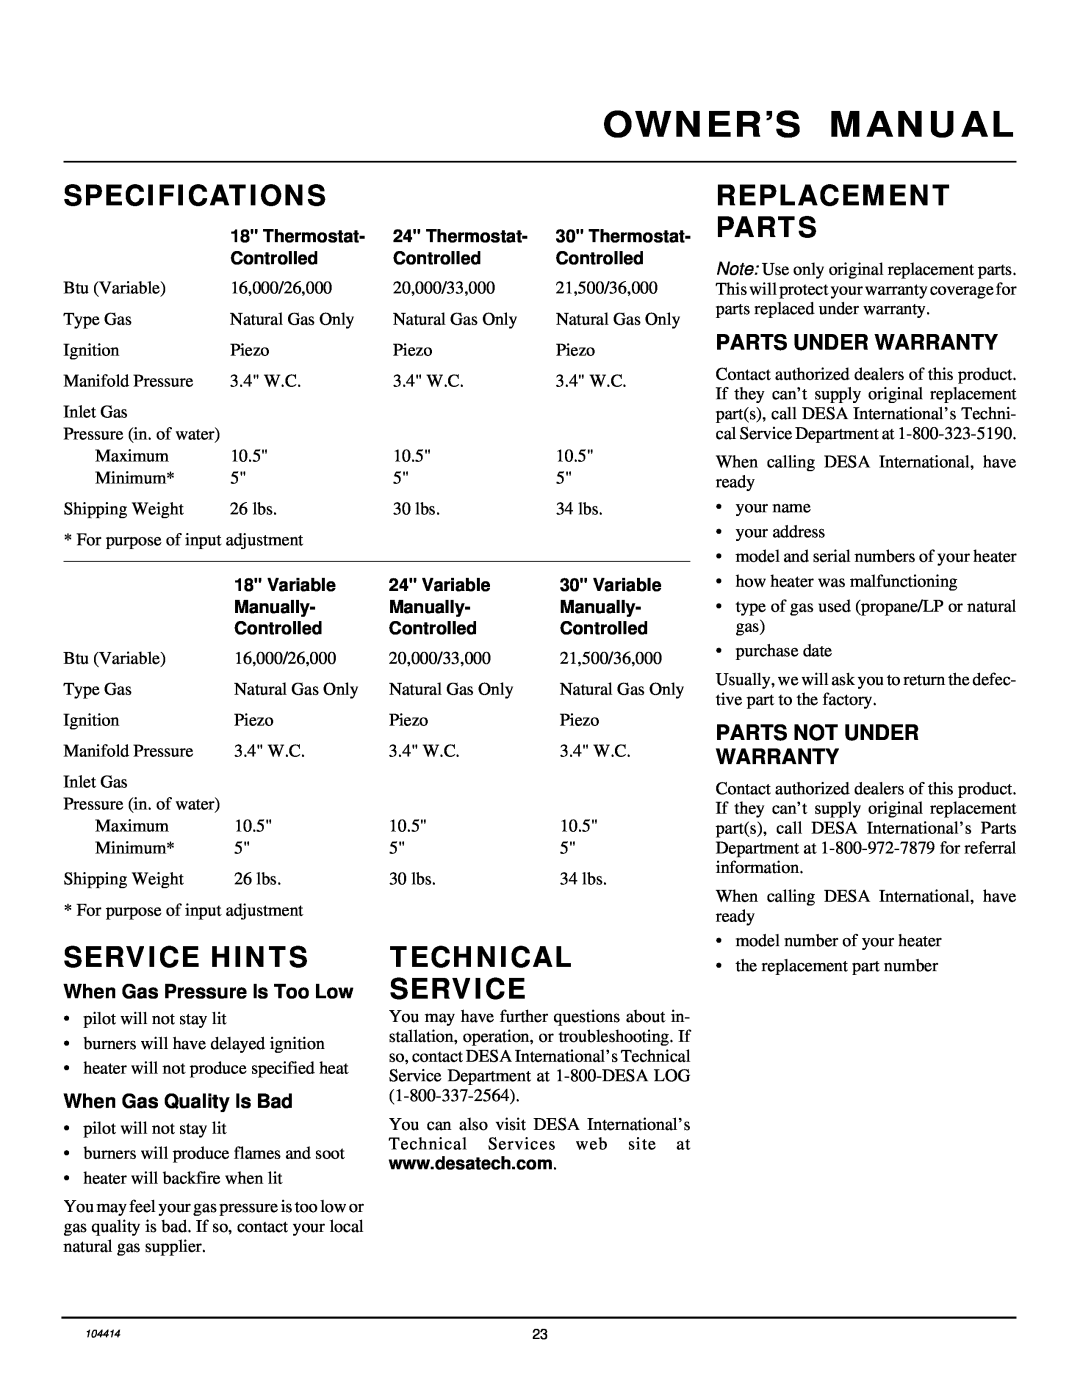 Desa CFS24NVC VS30N, B, C Specifications, Replacement Parts, Service Hints, Technical Service, Parts Under Warranty 